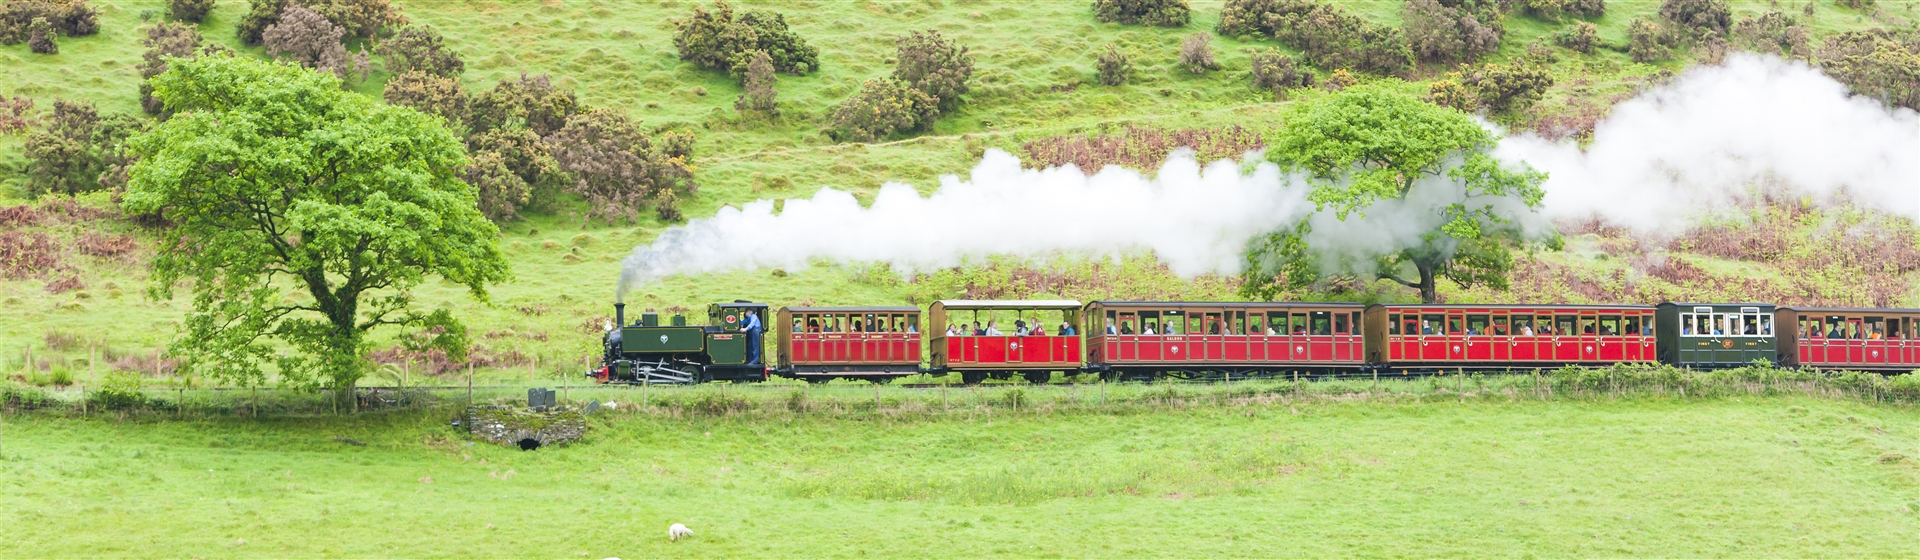 <img src="talyllyn_railway©shutterstock.jpeg" alt="Talyllyn Railway"/>